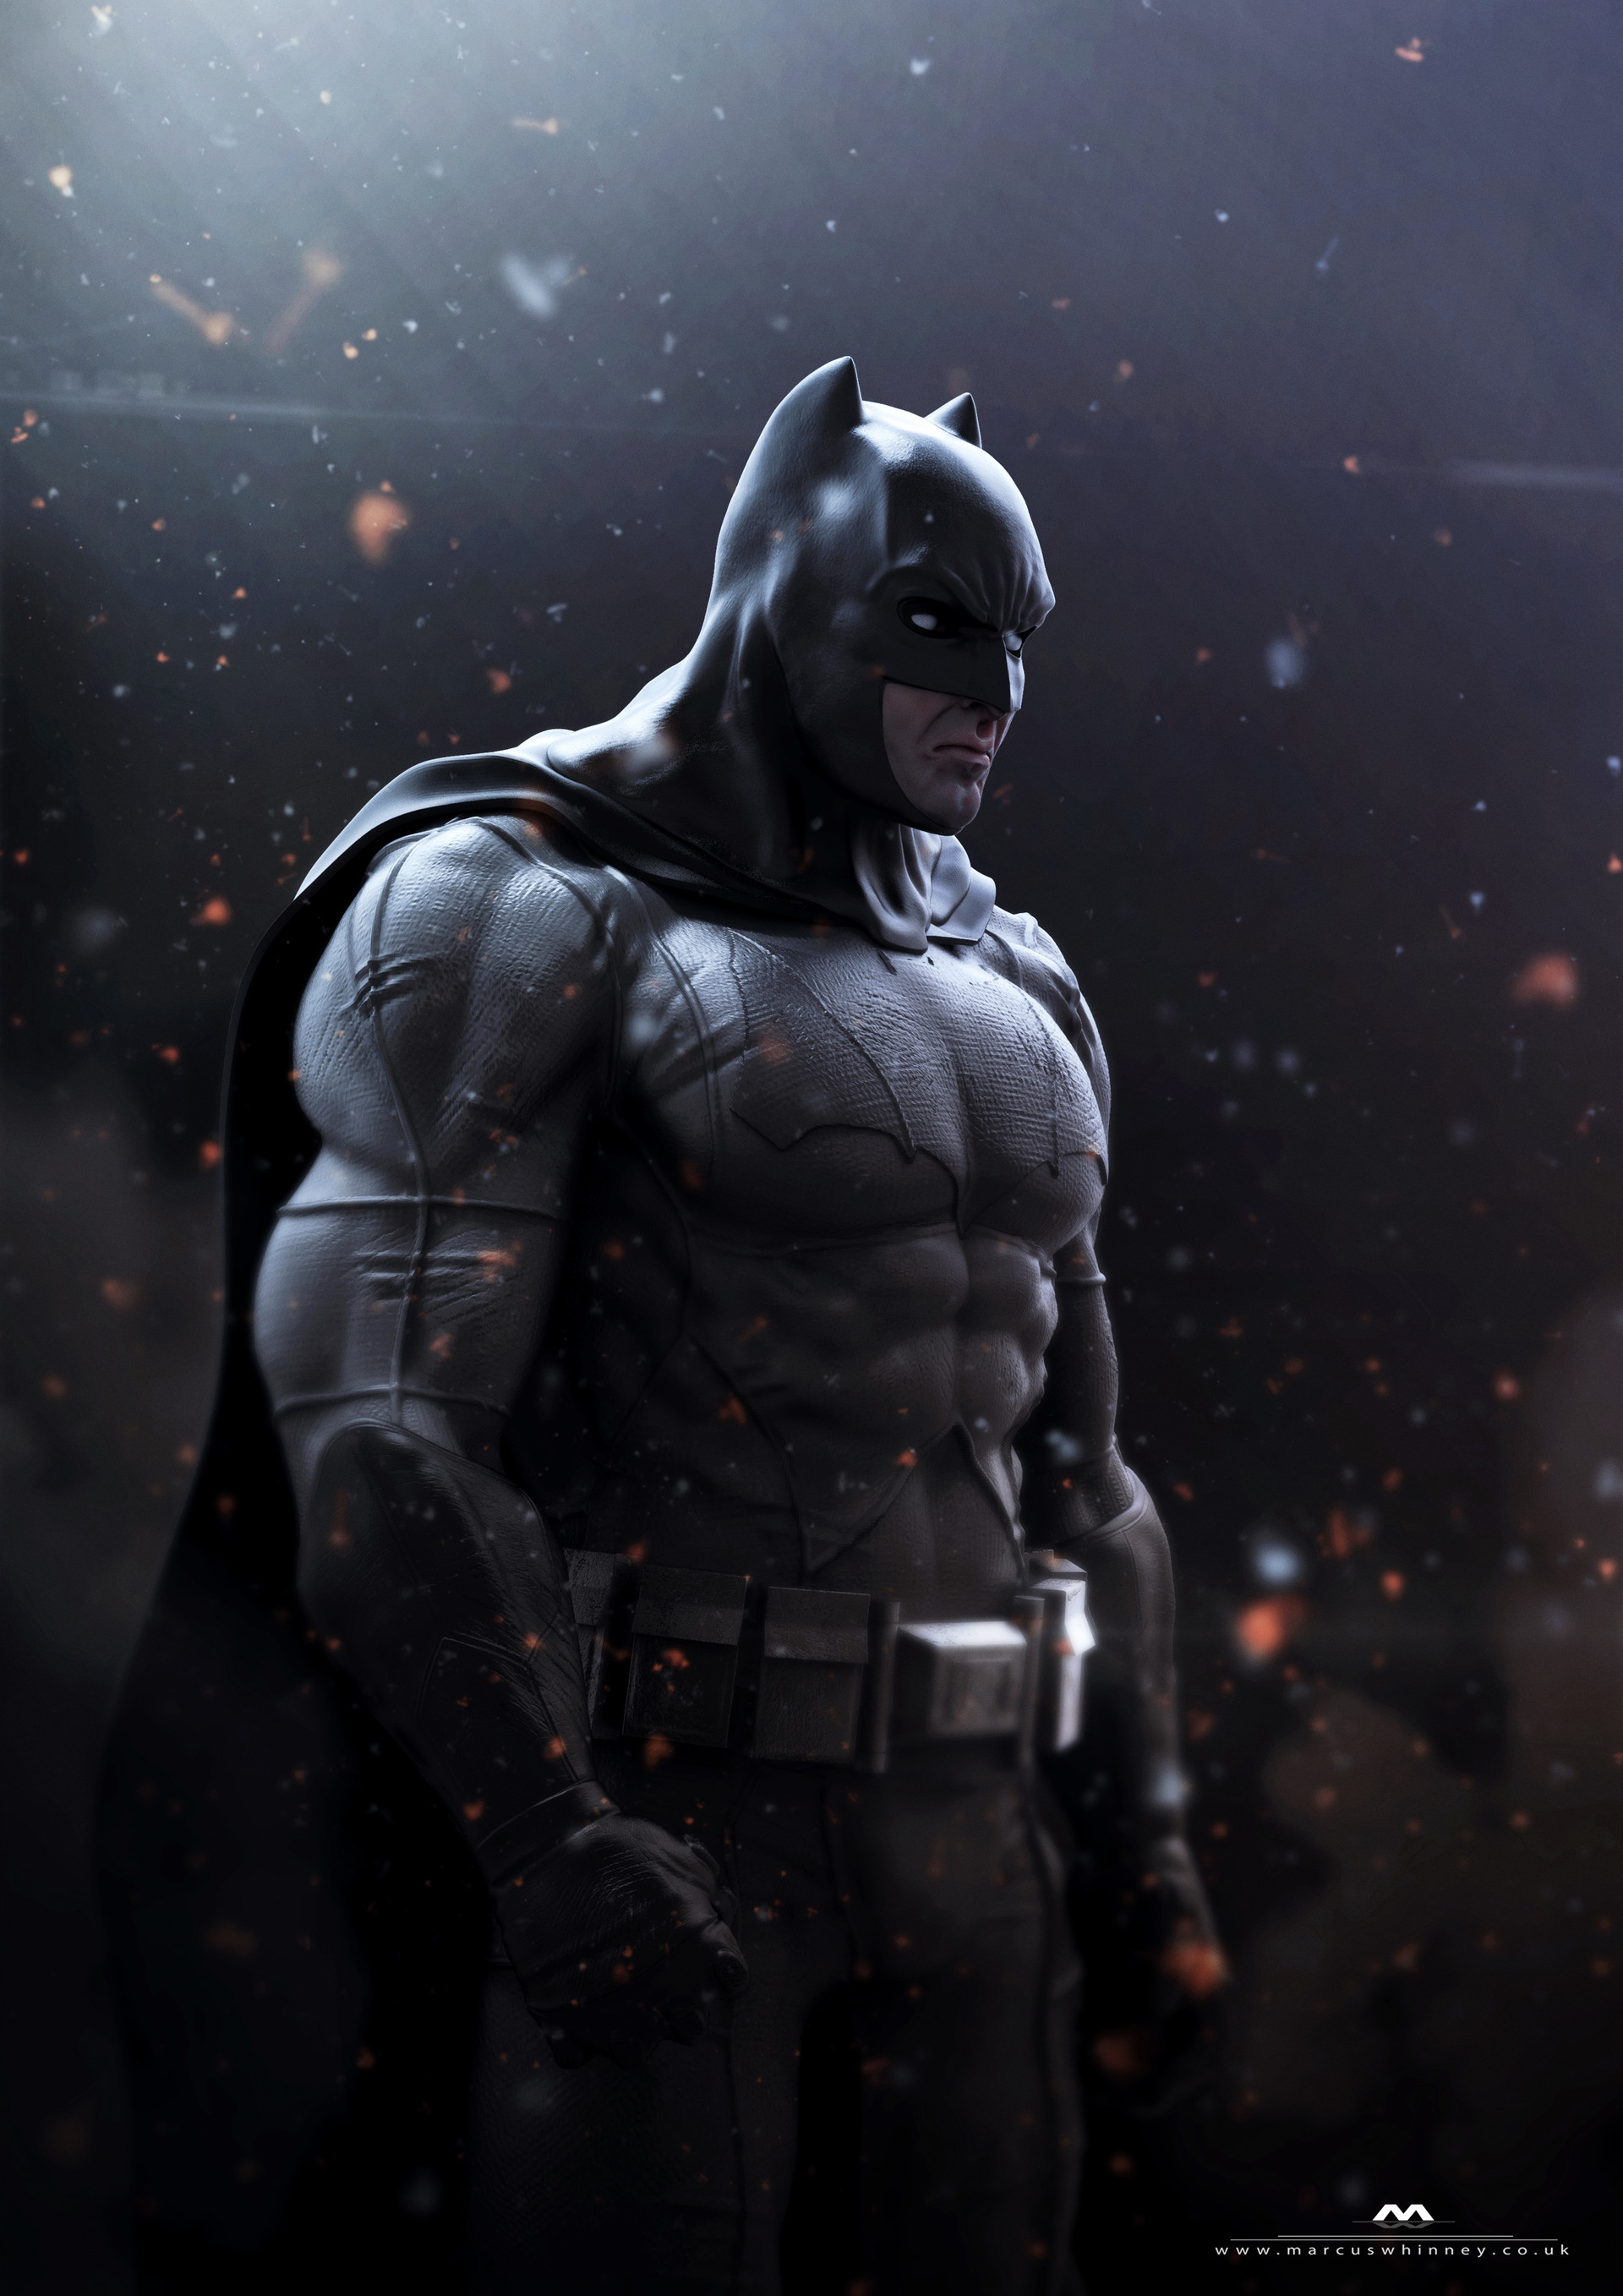 ArtStation - Batman Concept